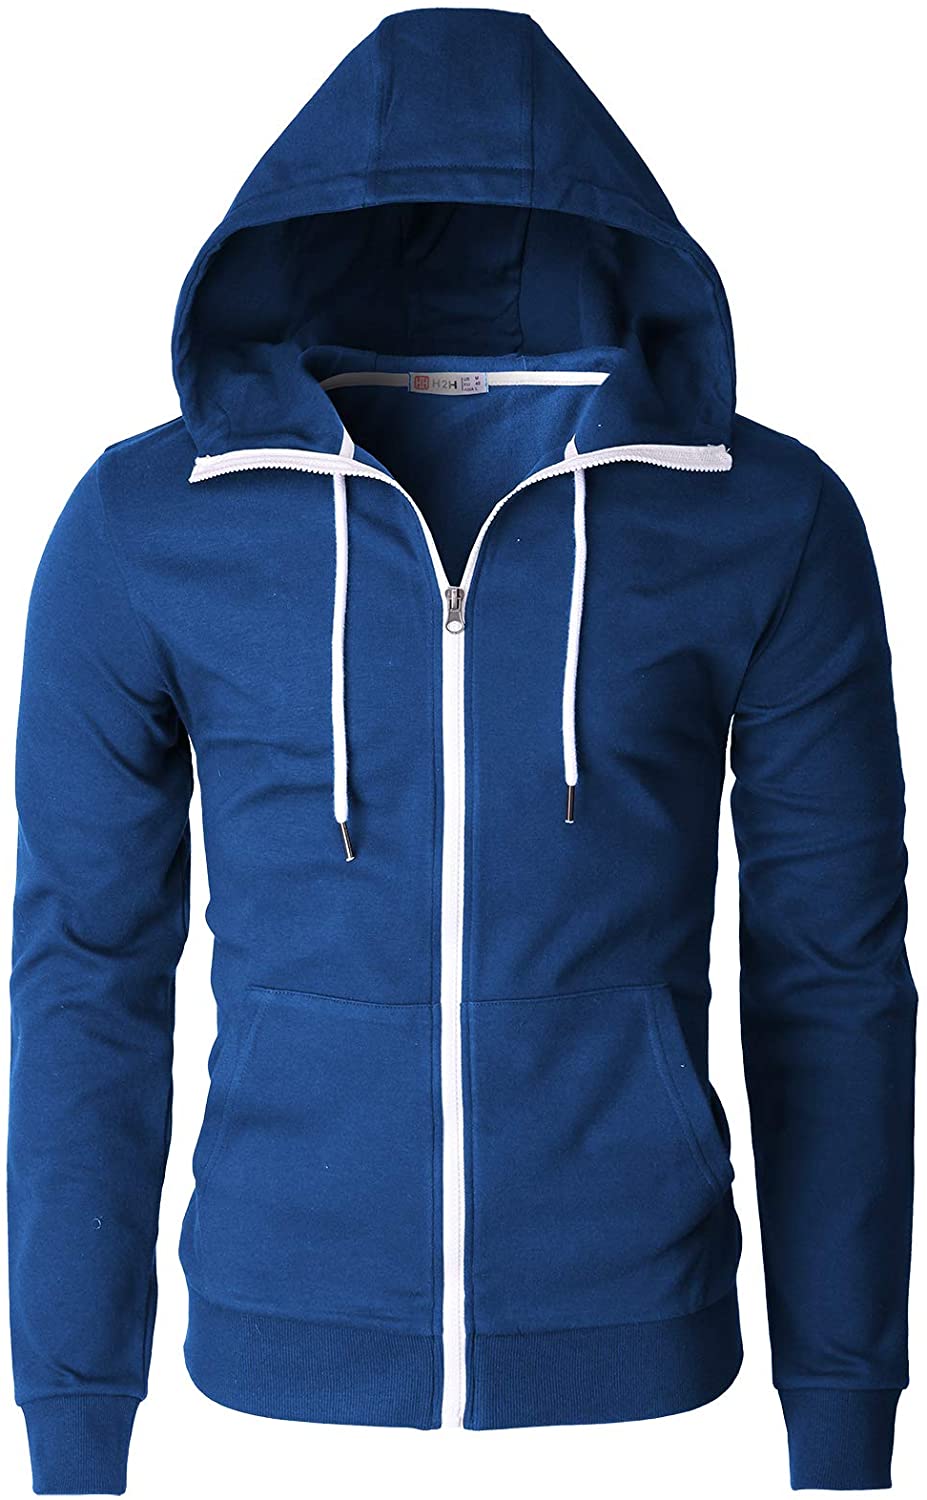 Chaqueta Casual Hombre Lightweight Uninsulated Zip Up Jacket Azul